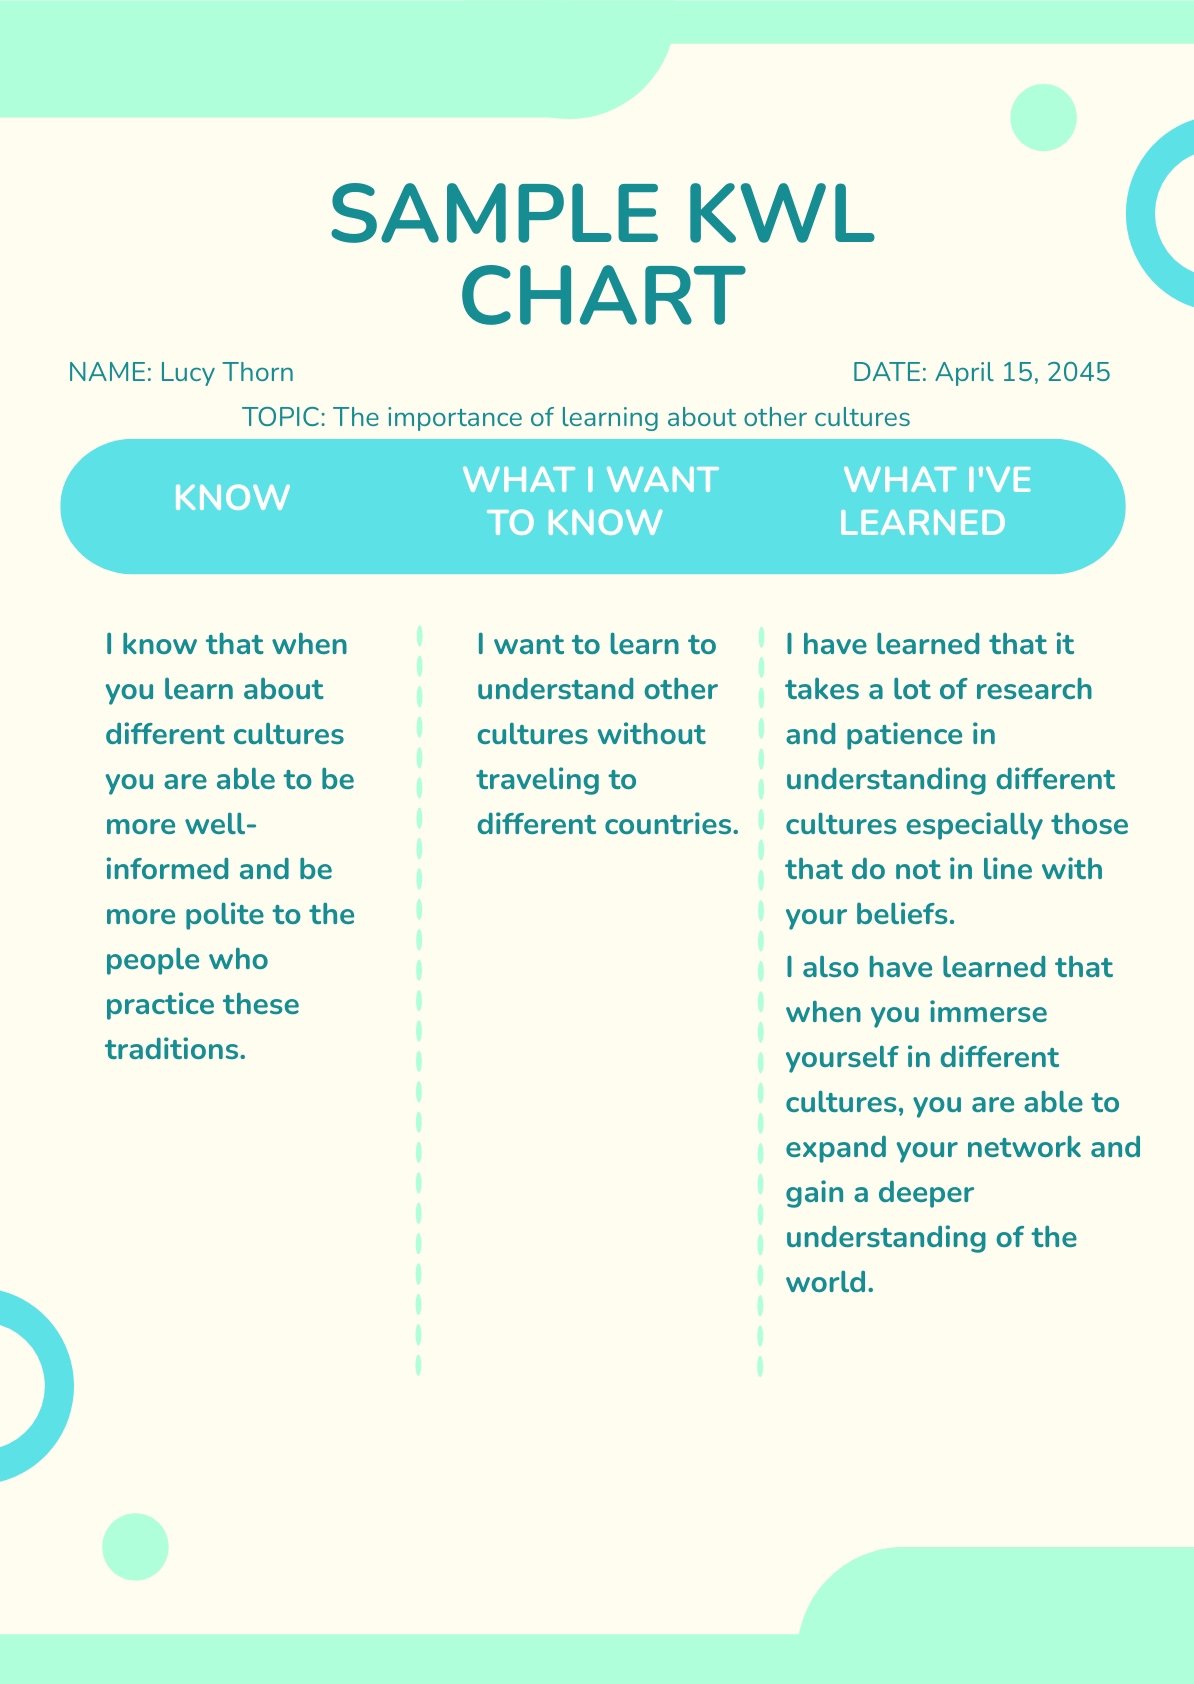 Sample KWL Chart